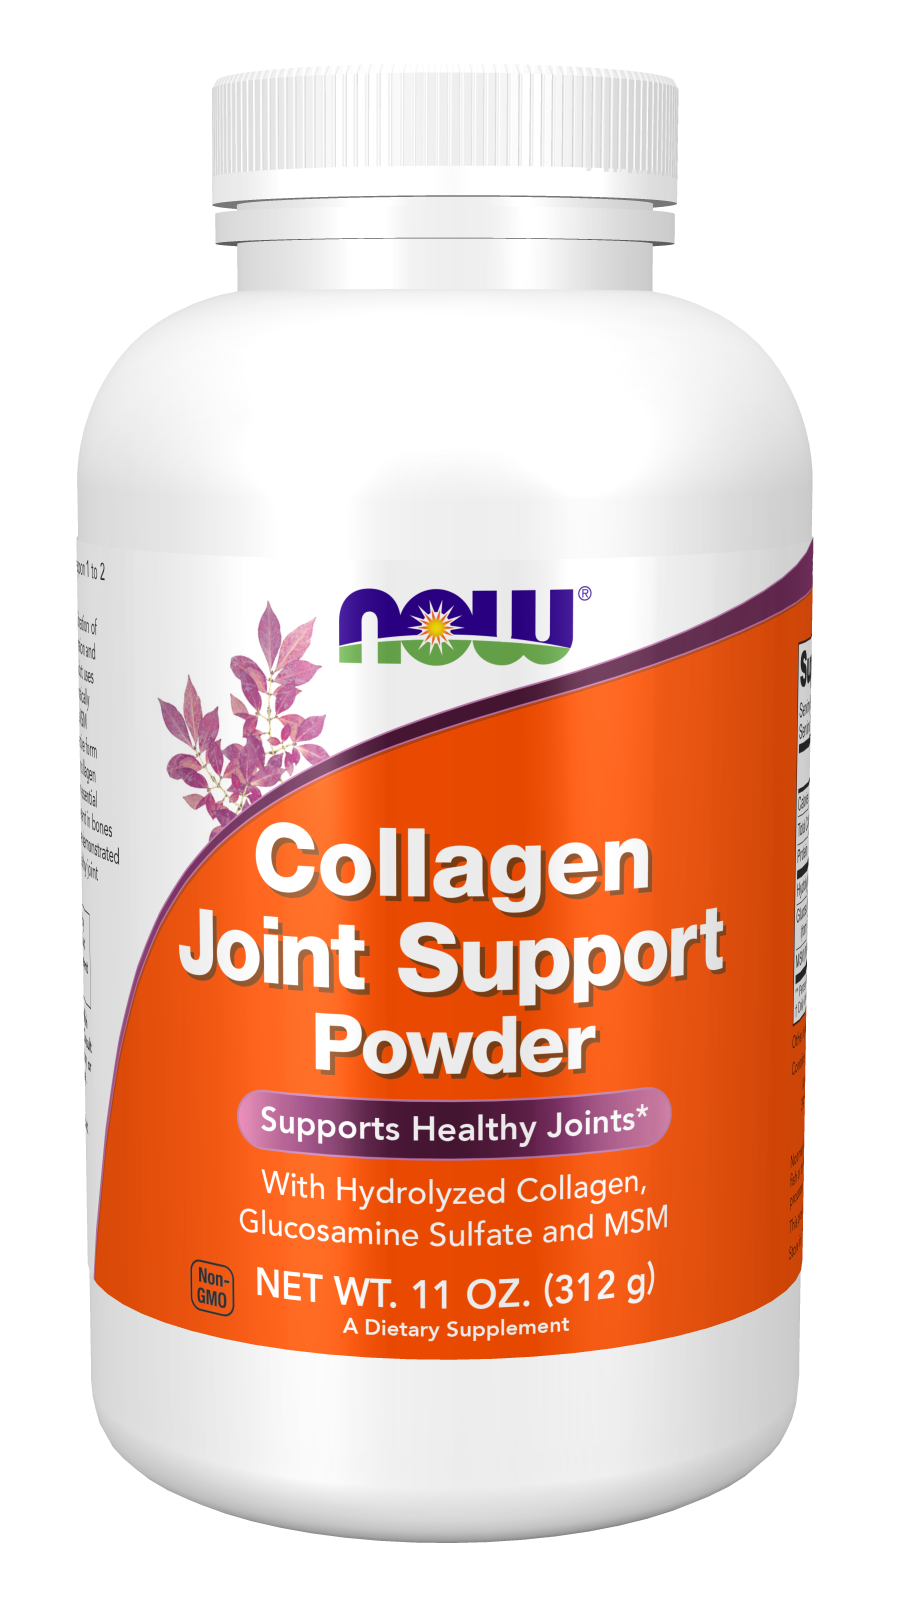 Collagen Joint Support Powder - 11 oz. Bottle Front